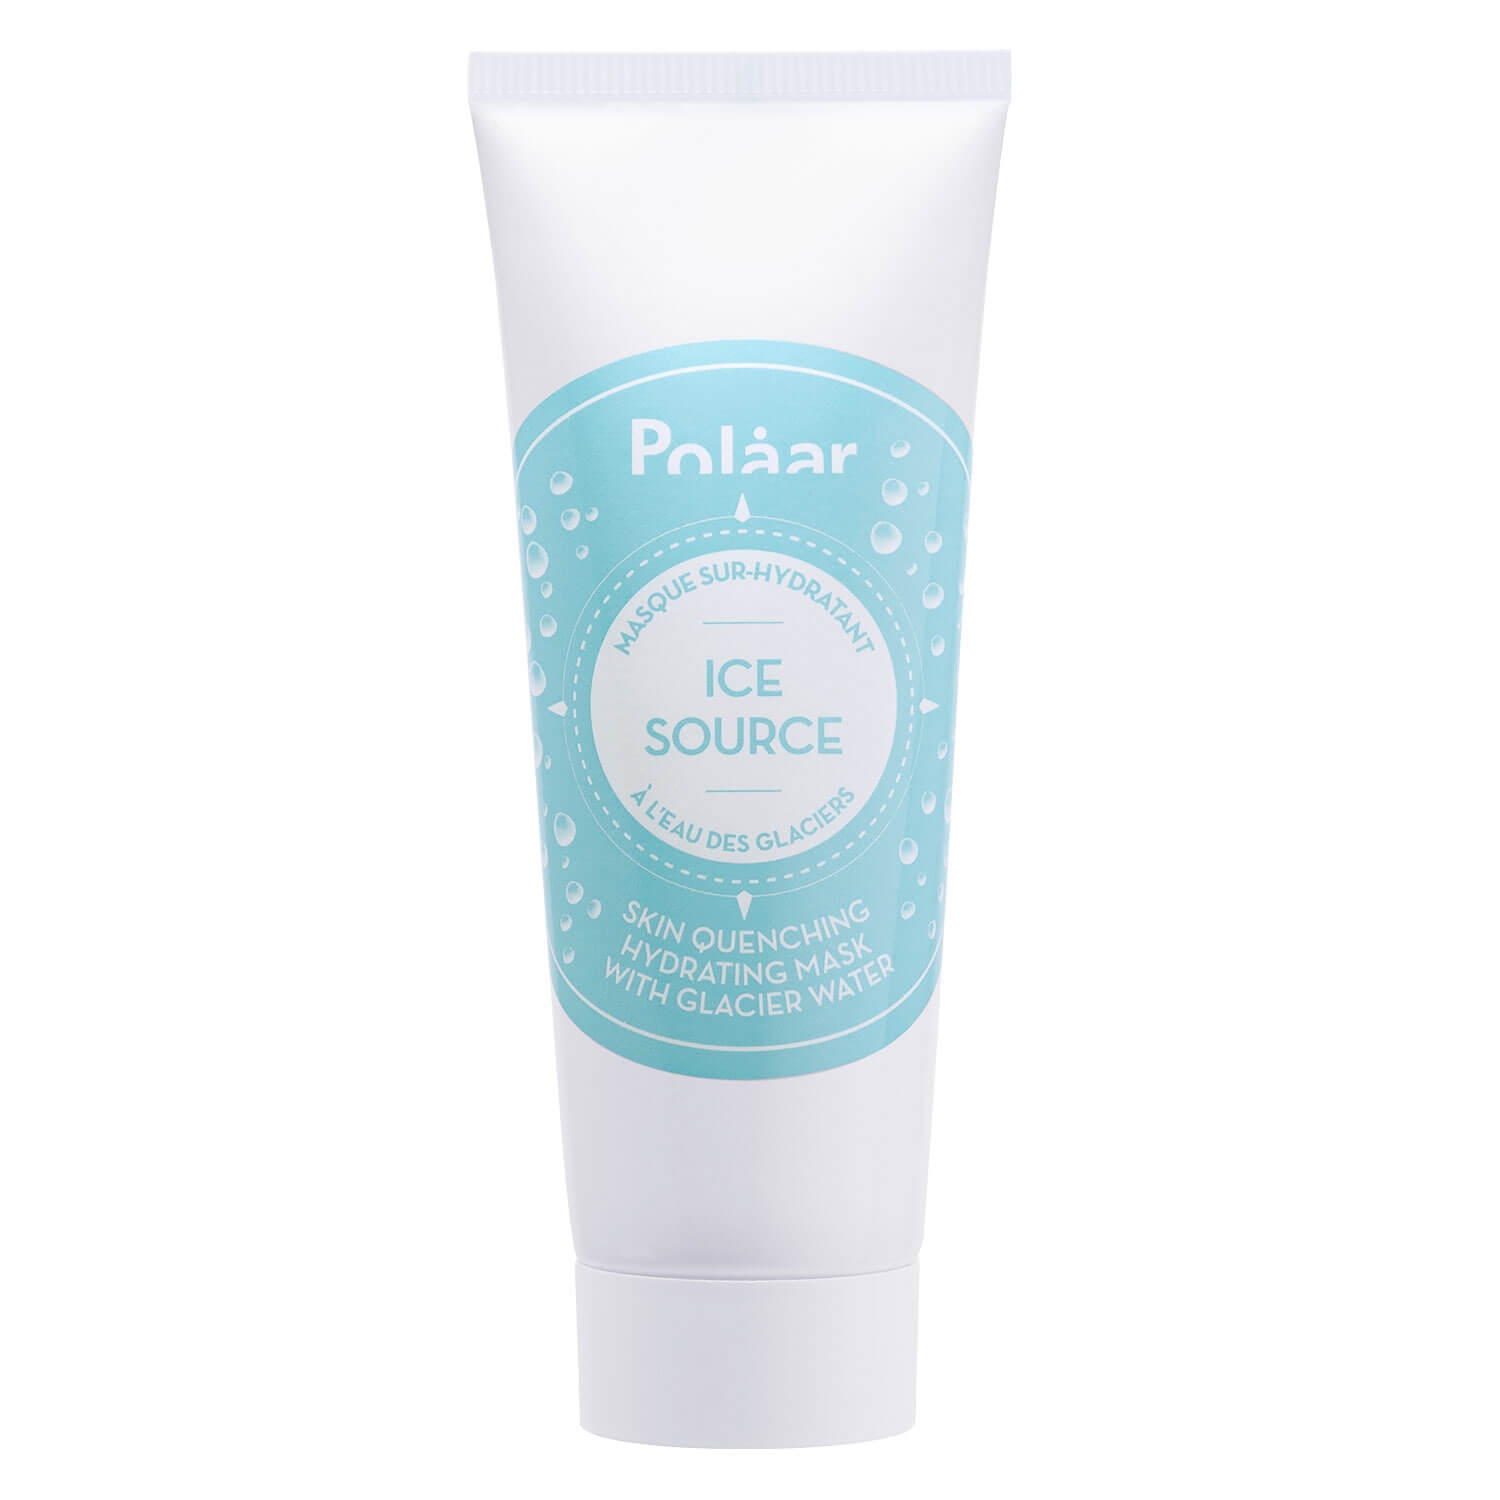 Image du produit de Polaar - Ice Source Skin Quenching Hydrating Mask